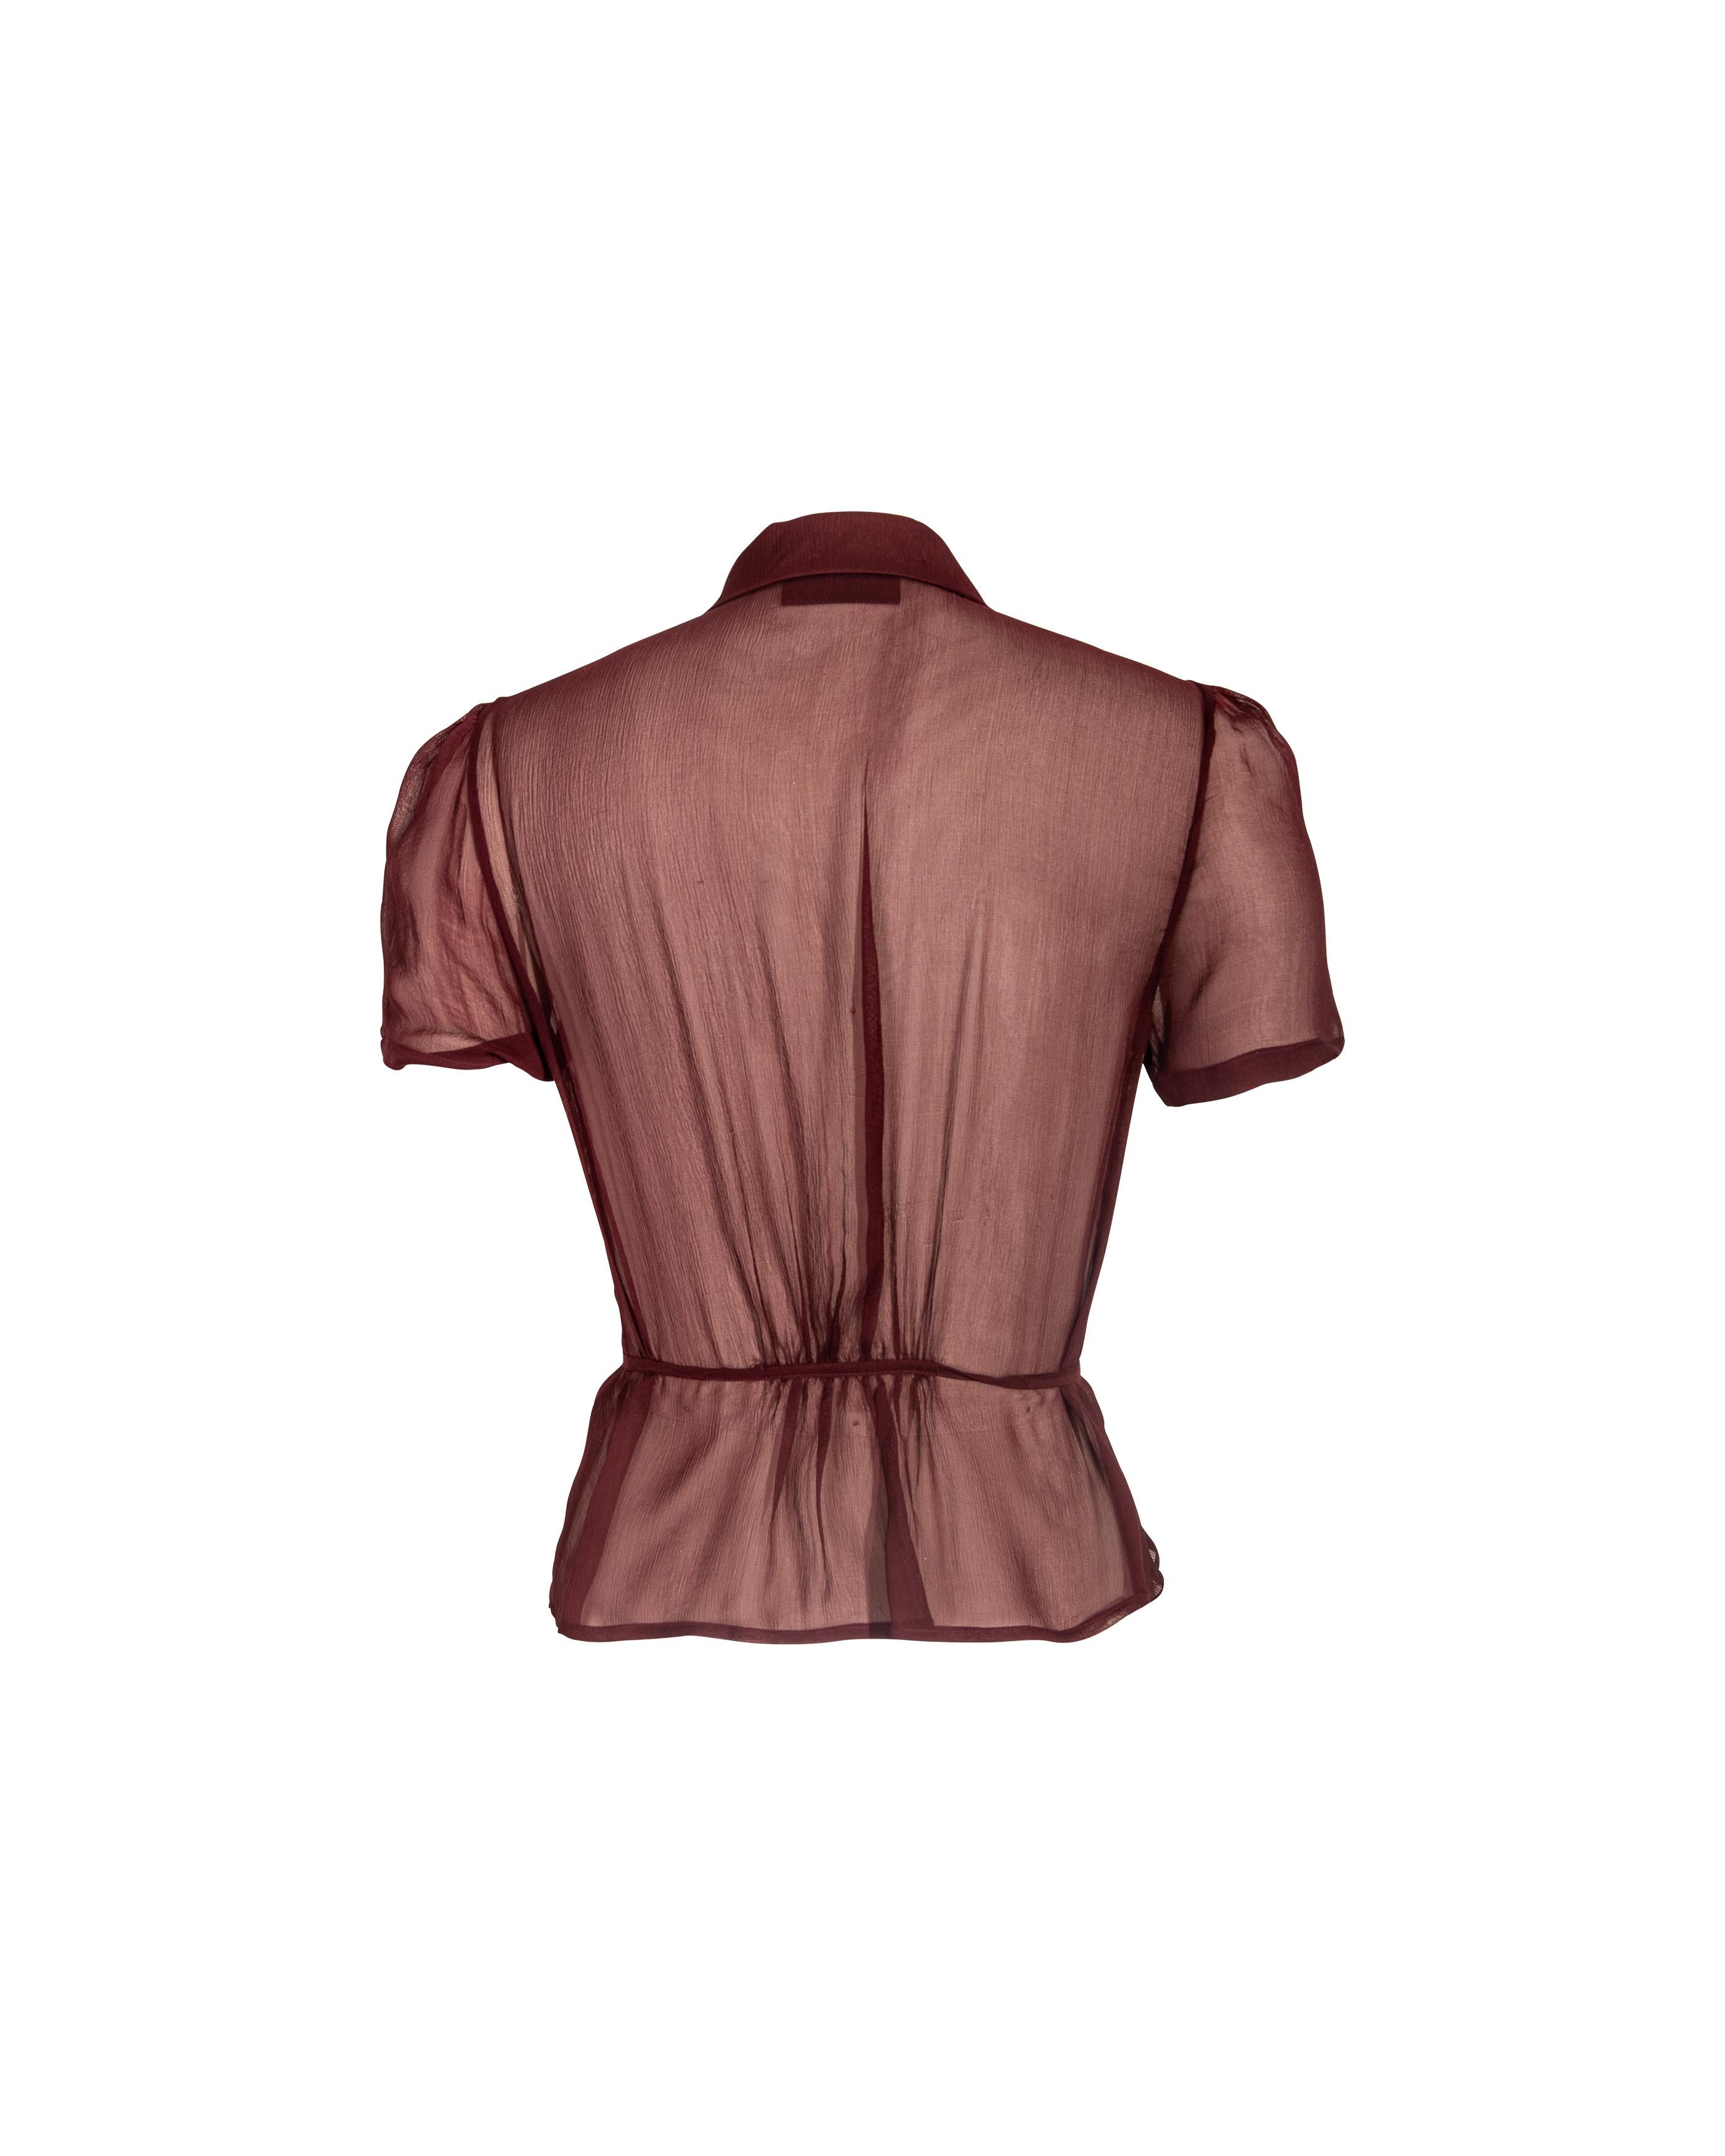 S/S 1997 Prada by Miuccia Prada Merlot Silk Chiffon Skirt Set 11